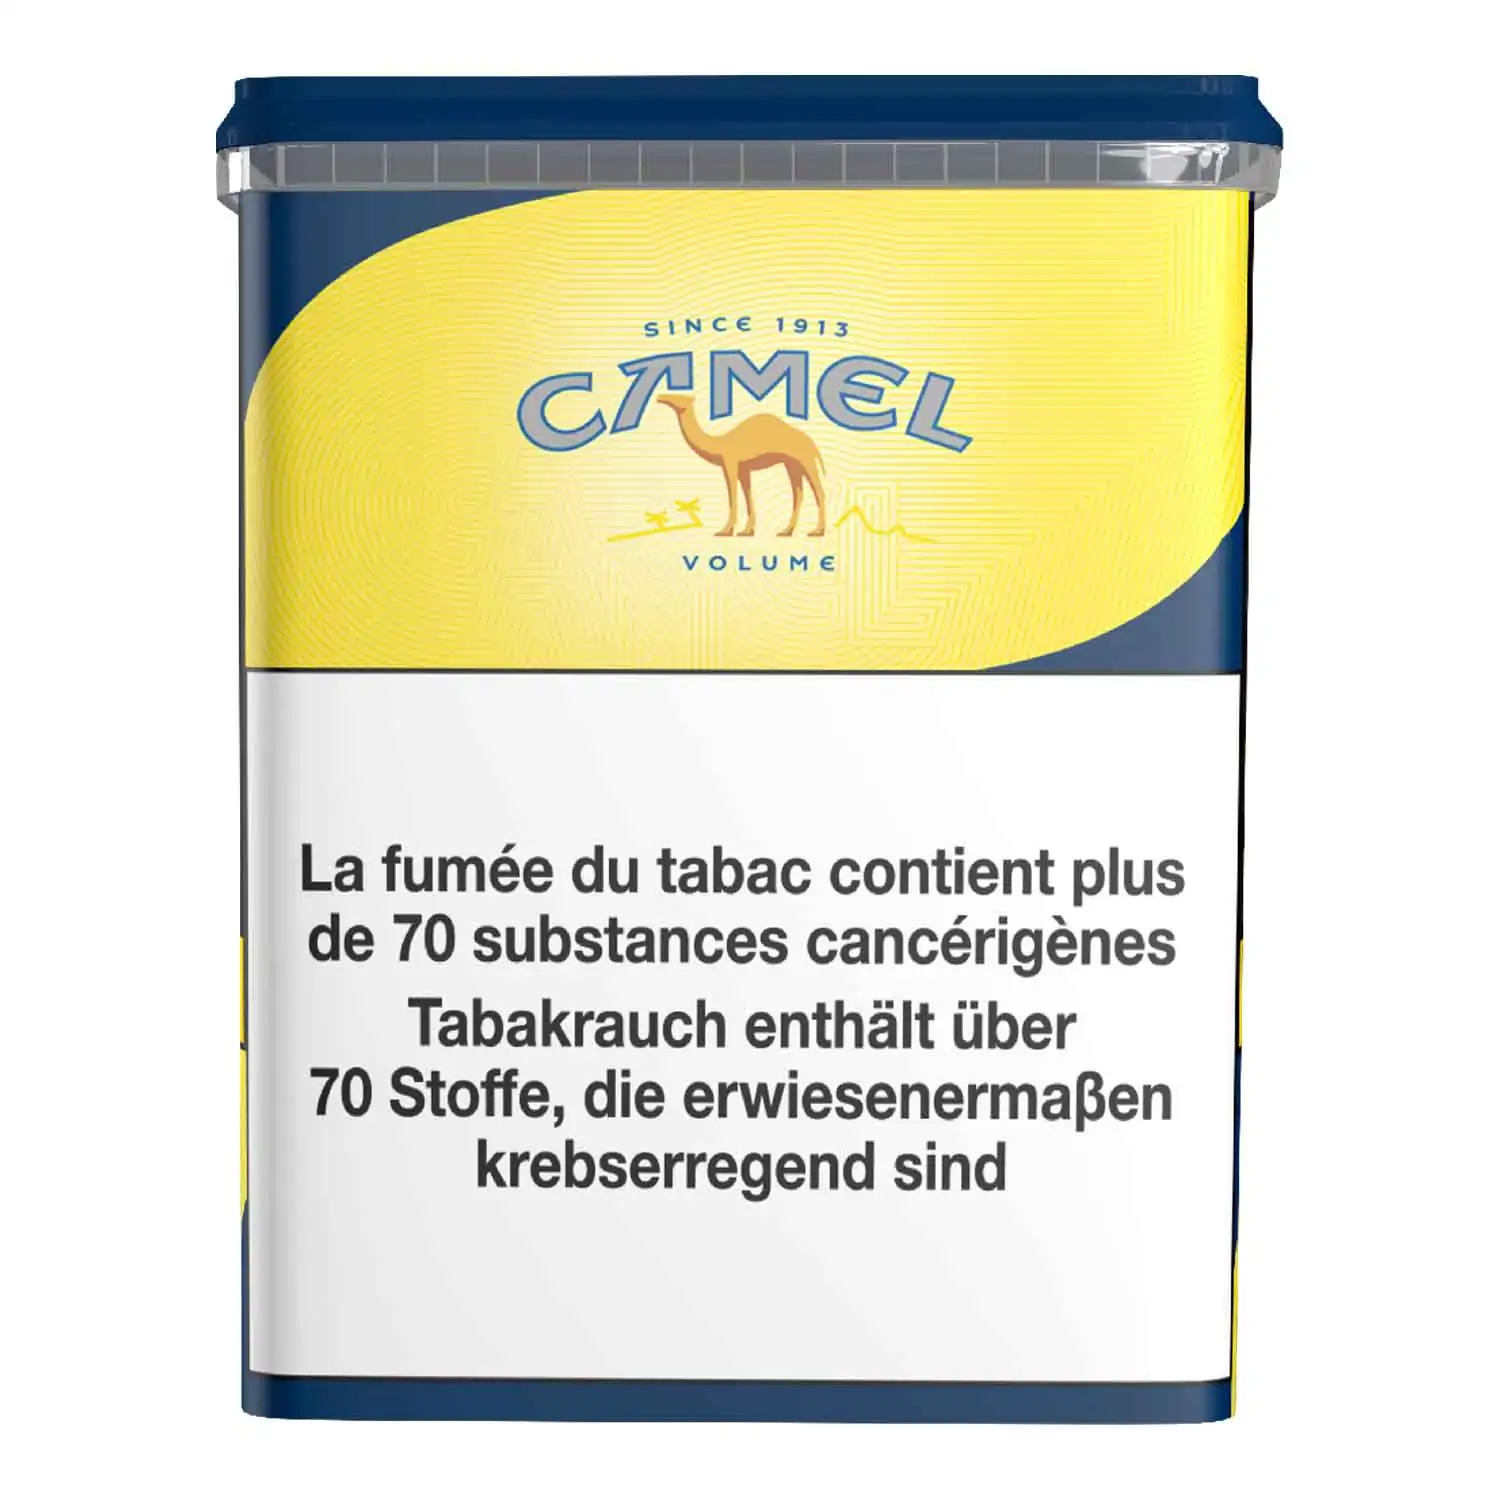 Camel volume yellow 650g - Buy at Real Tobacco